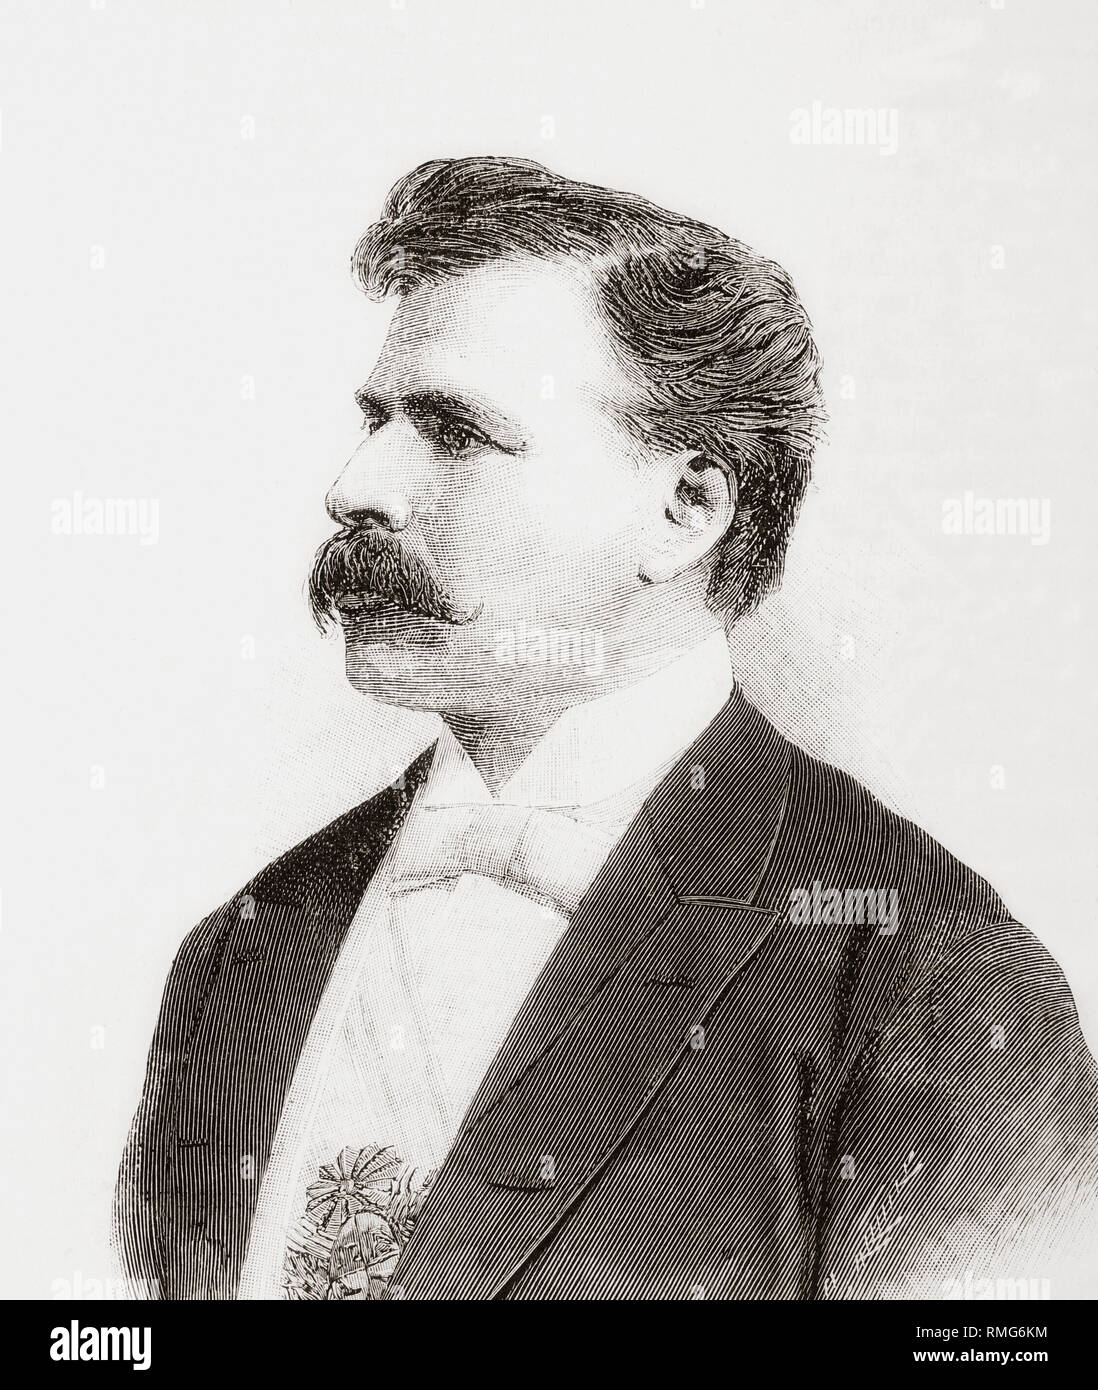 Julio Herrero y Obes, 1841 - 1912.  Uruguayan politician, lawyer, journalist and 16th president of Uruguay.  From La Ilustracion Artistica, published 1887. Stock Photo